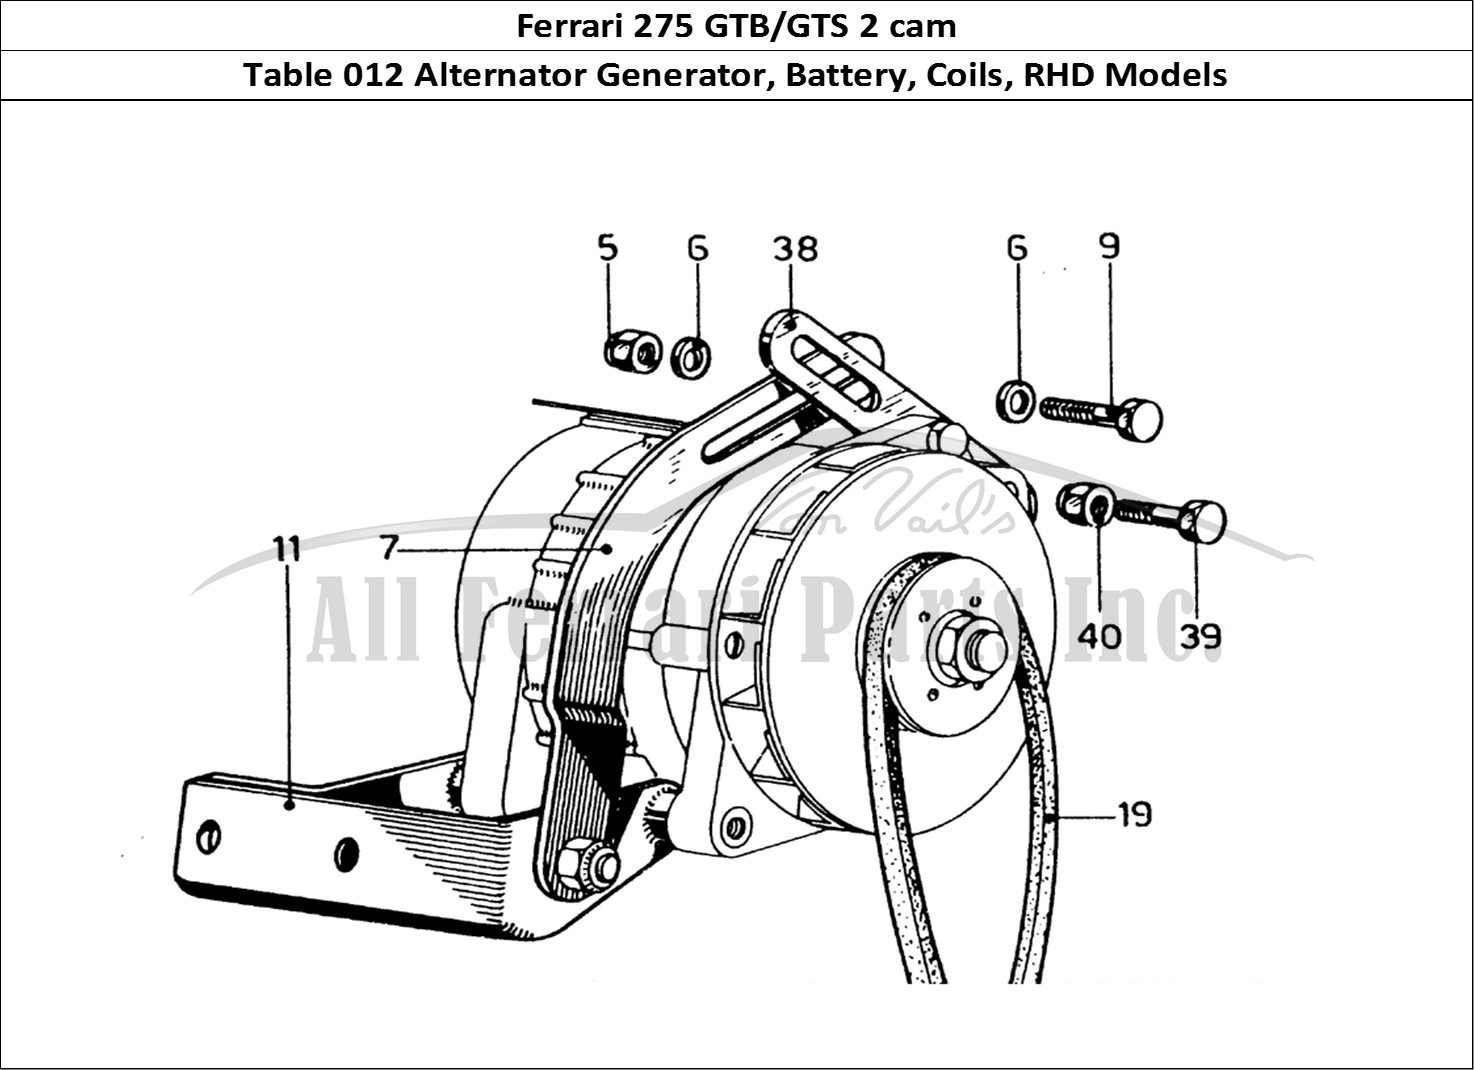 Ferrari Parts Ferrari 275 GTB/GTS 2 cam Page 012 Generator - Battery & Coi